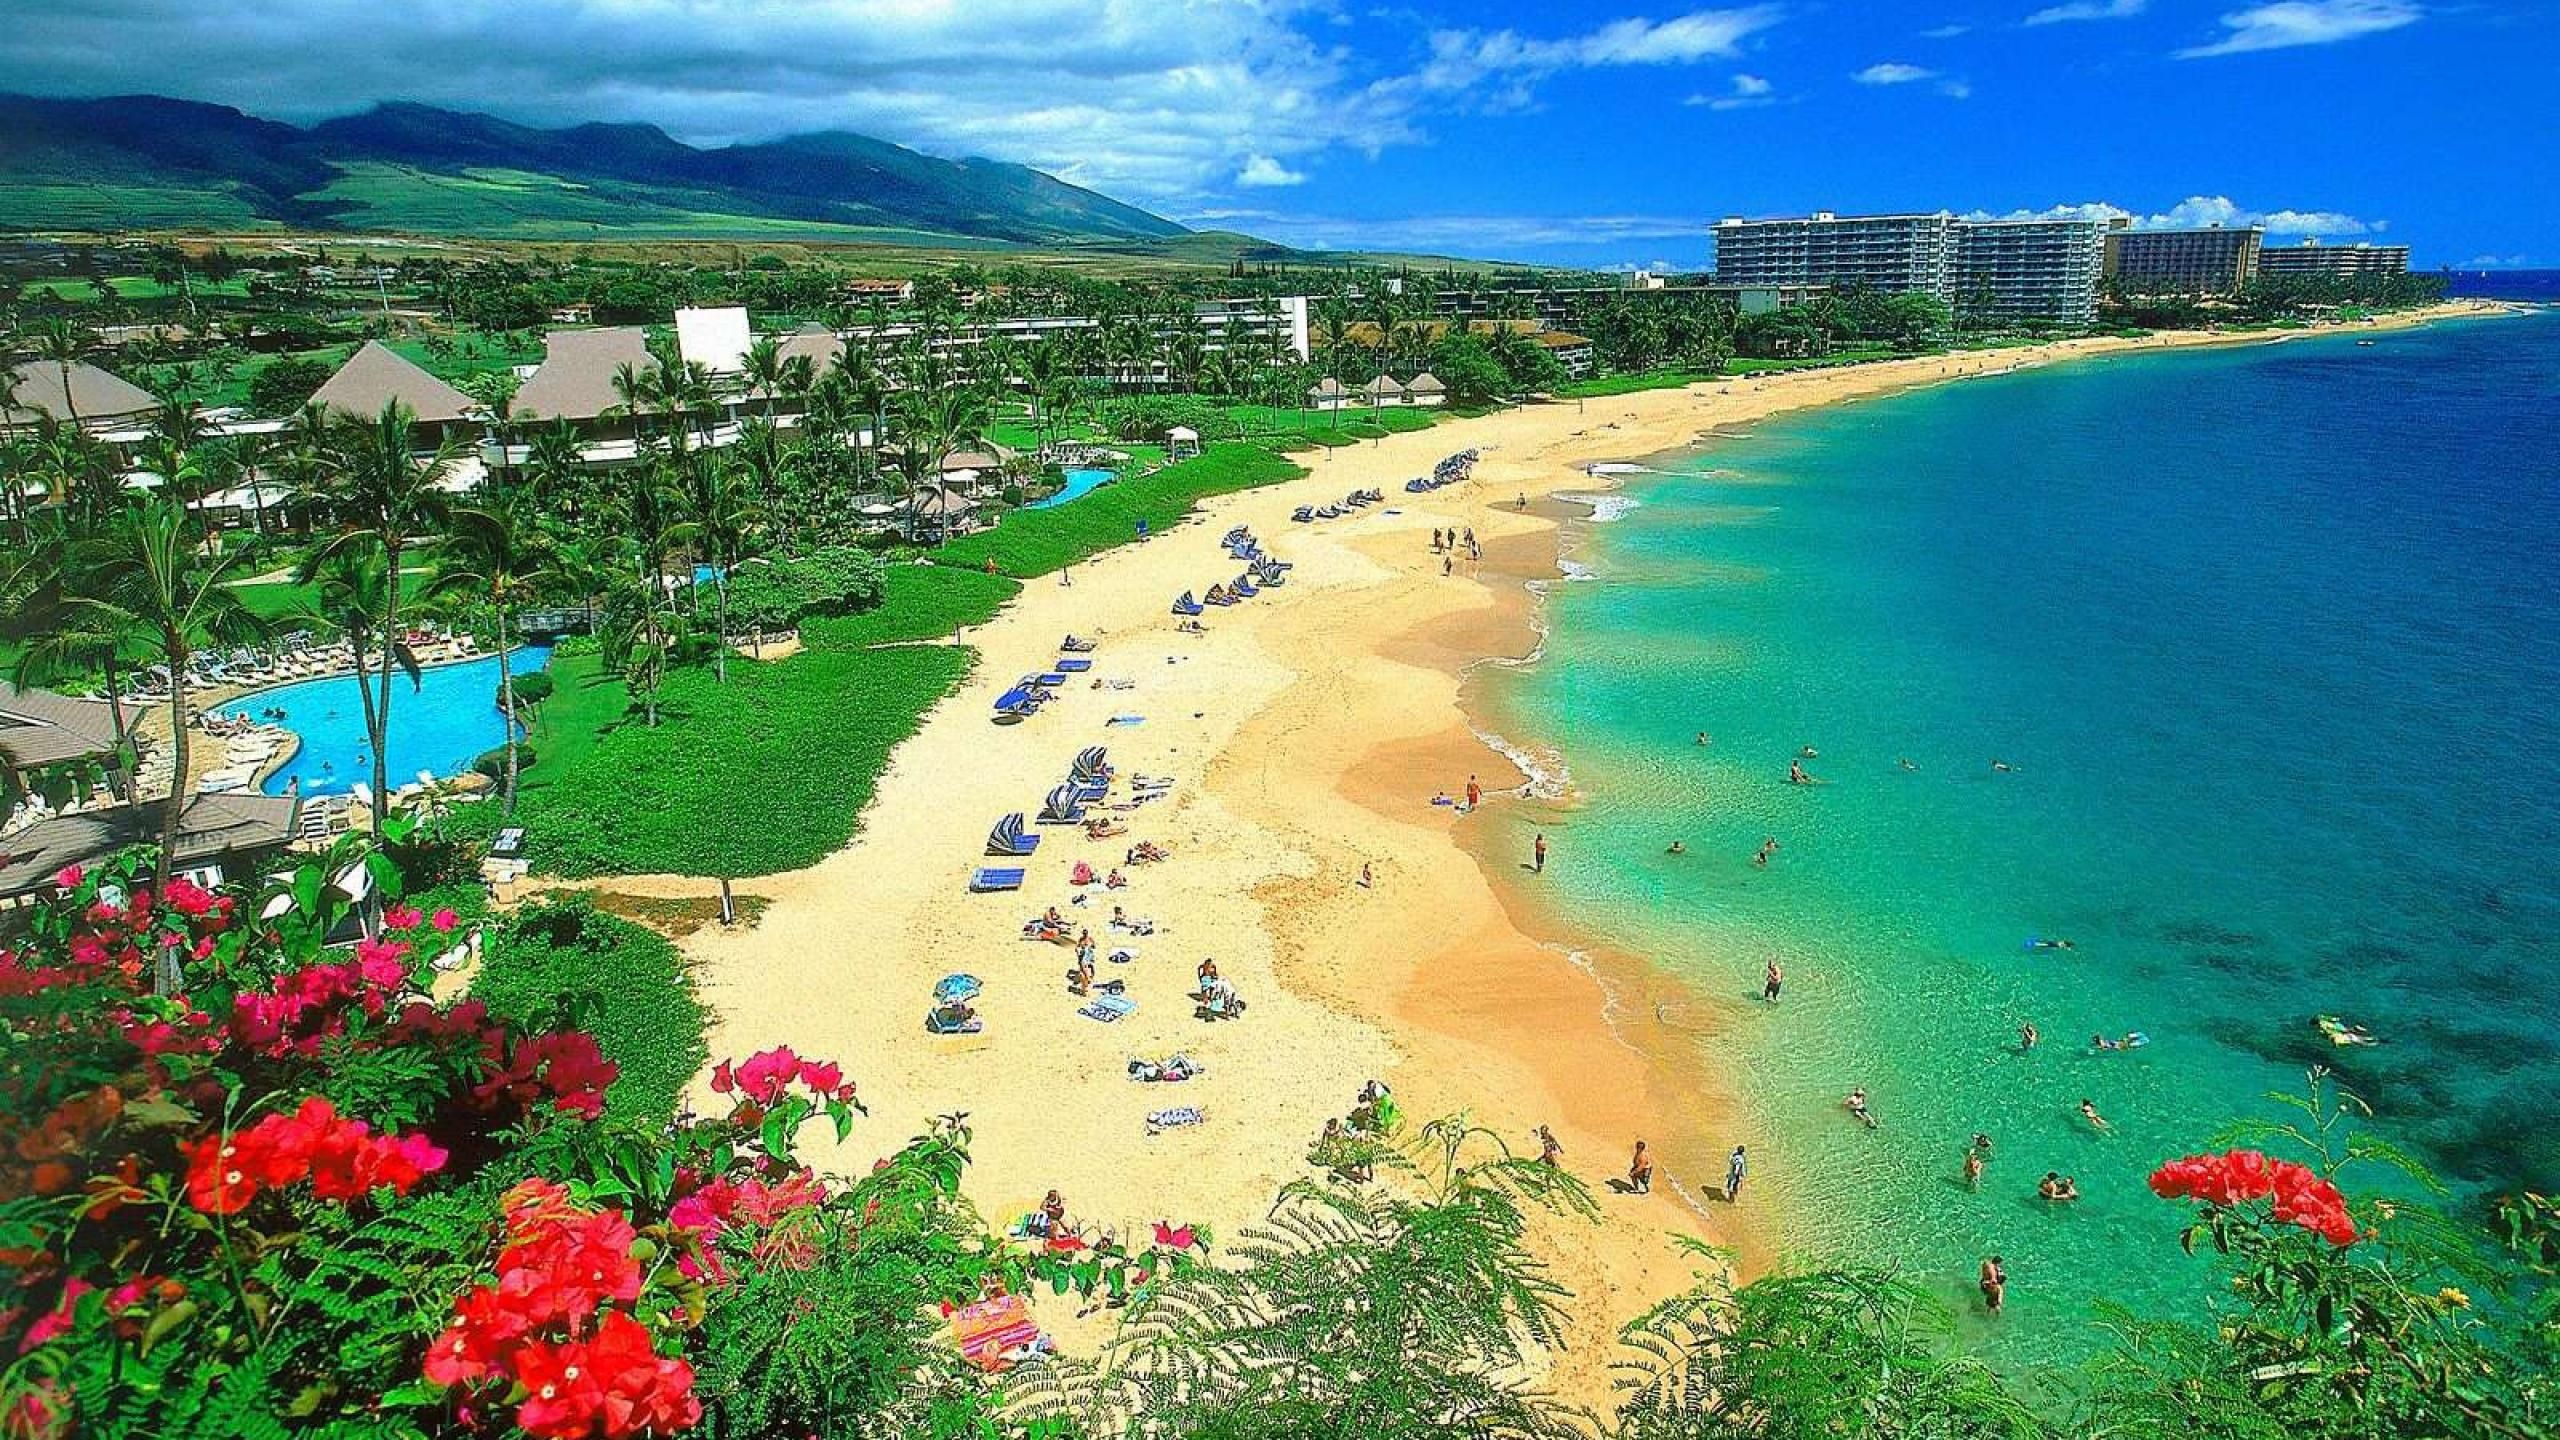 Beautiful Scenery Kaanapali Beach Maui Hawaii Archipelago United States World